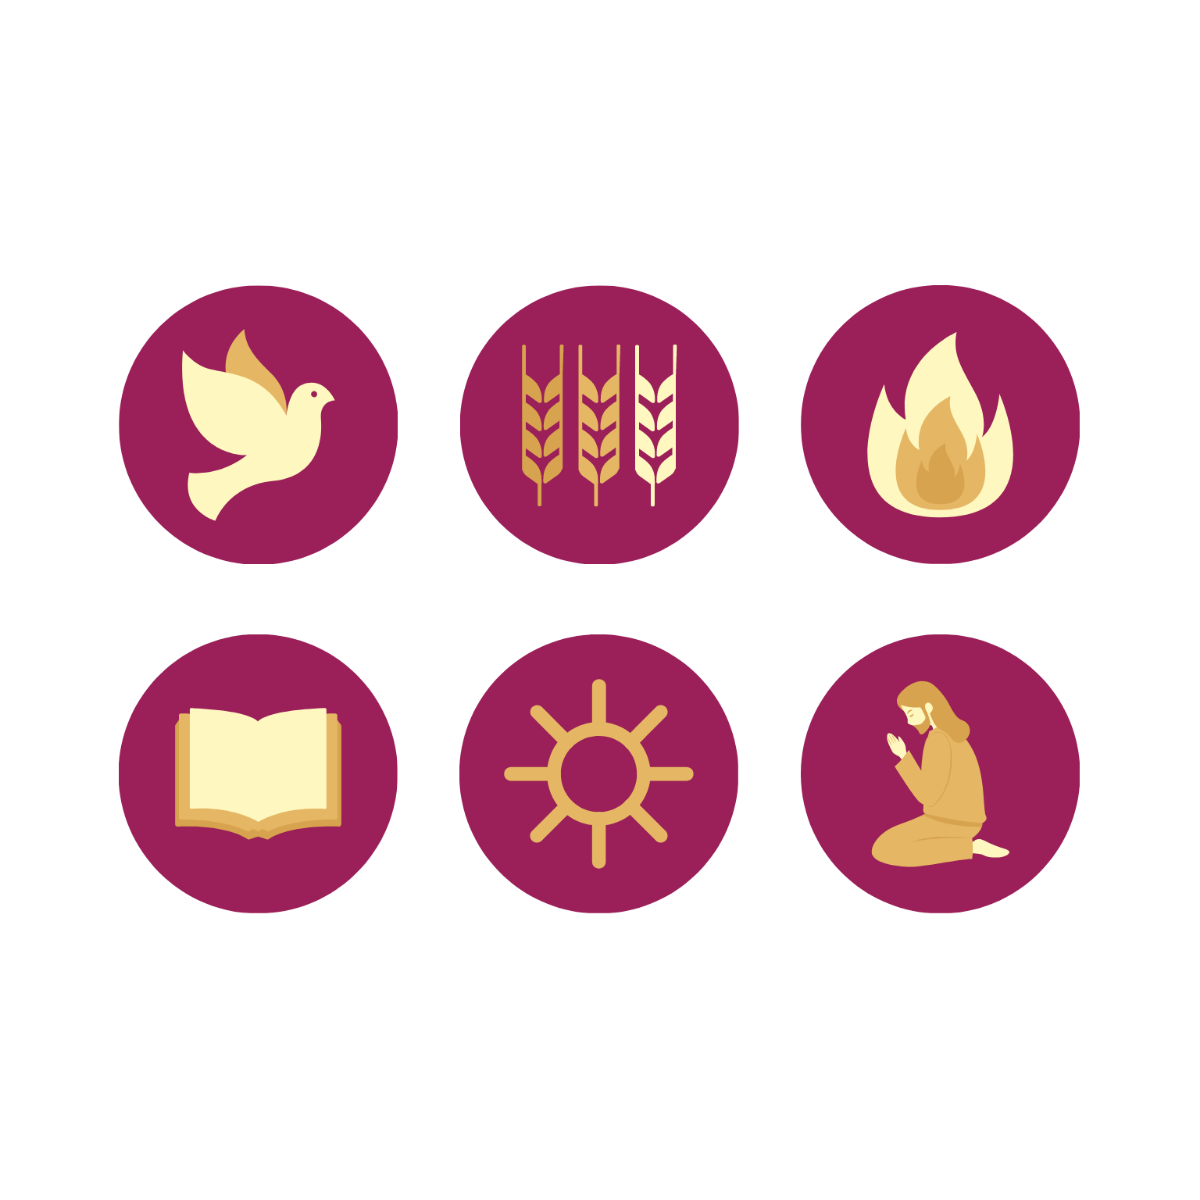 Pentecost Sunday Icons Template